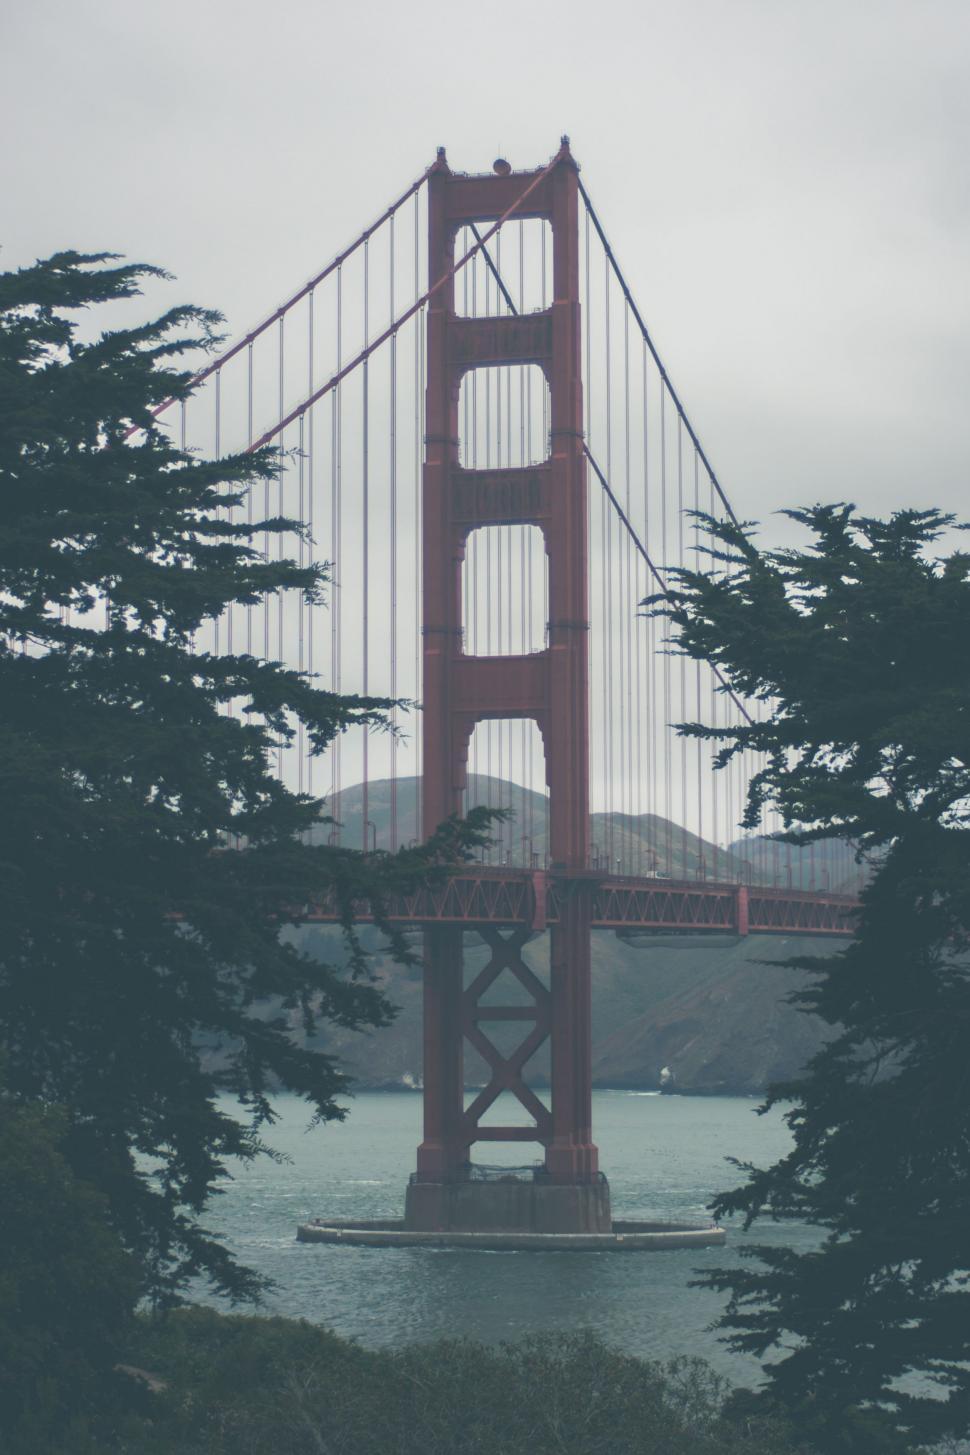 Free Image of A Glimpse of the Golden Gate Bridge Through Trees 